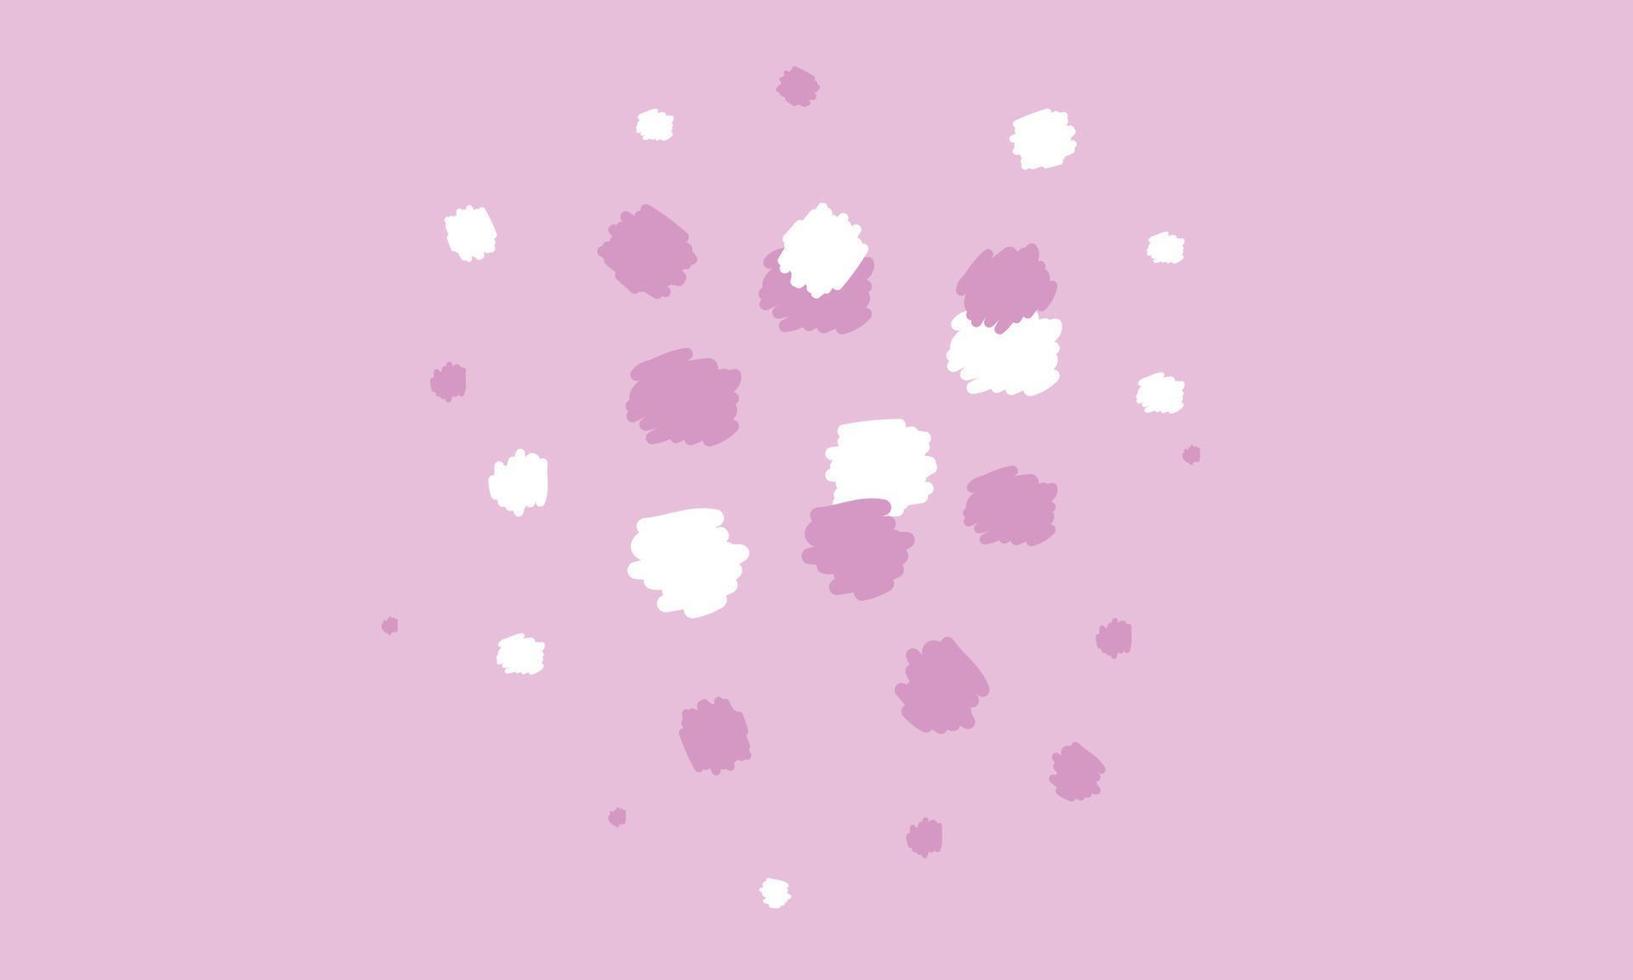 textura vectorial rosa claro con formas abstractas. vector